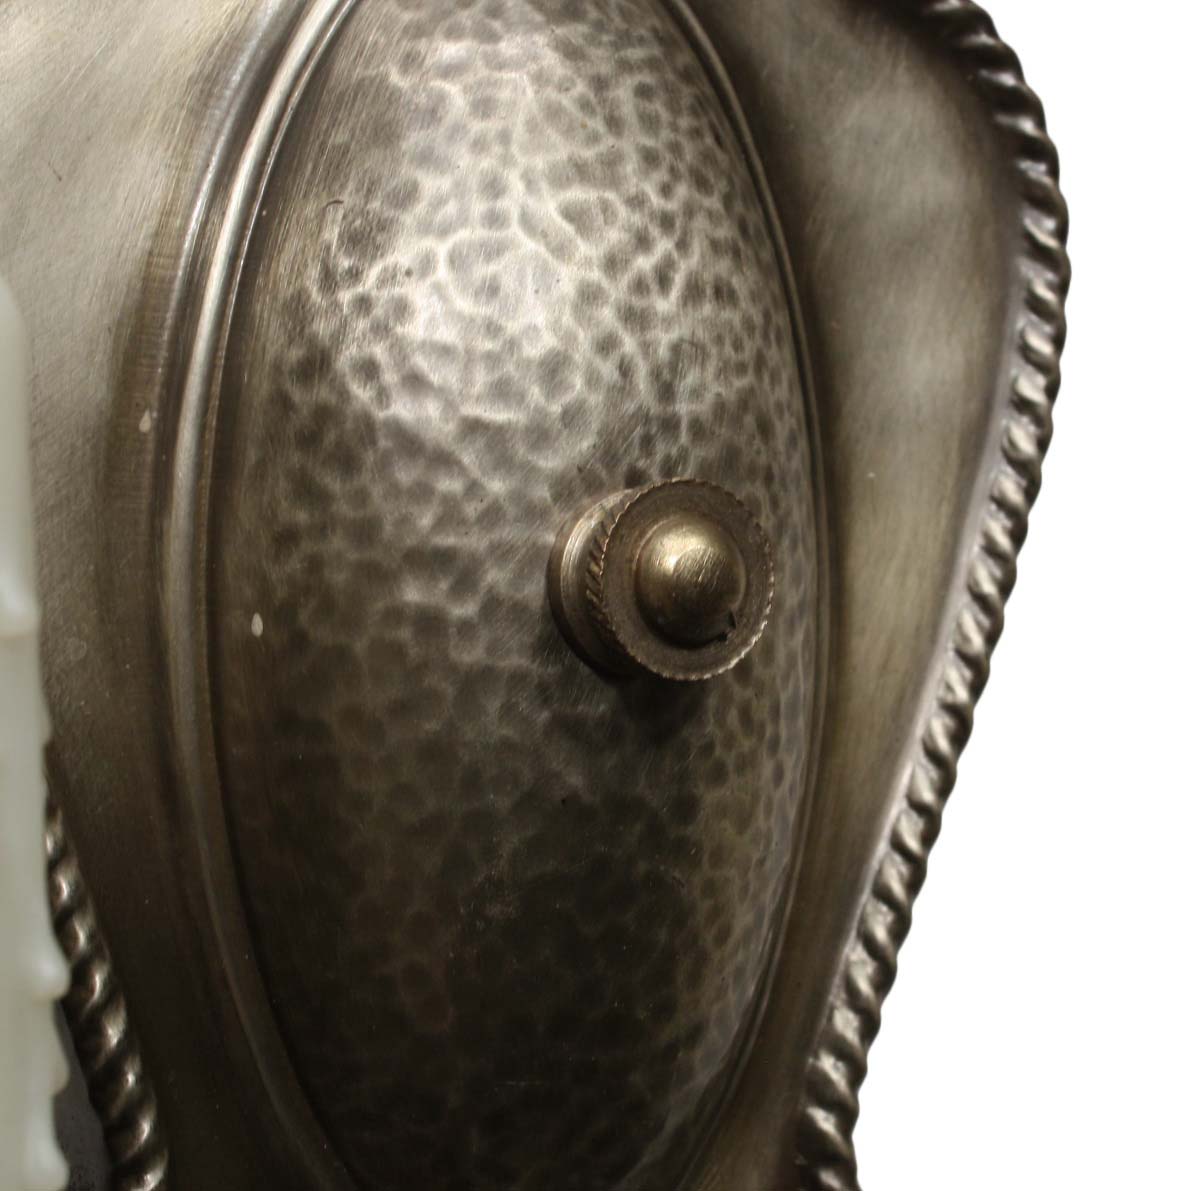 Tudor Sconce Pair in Darkened Nickel, Antique Lighting-59402